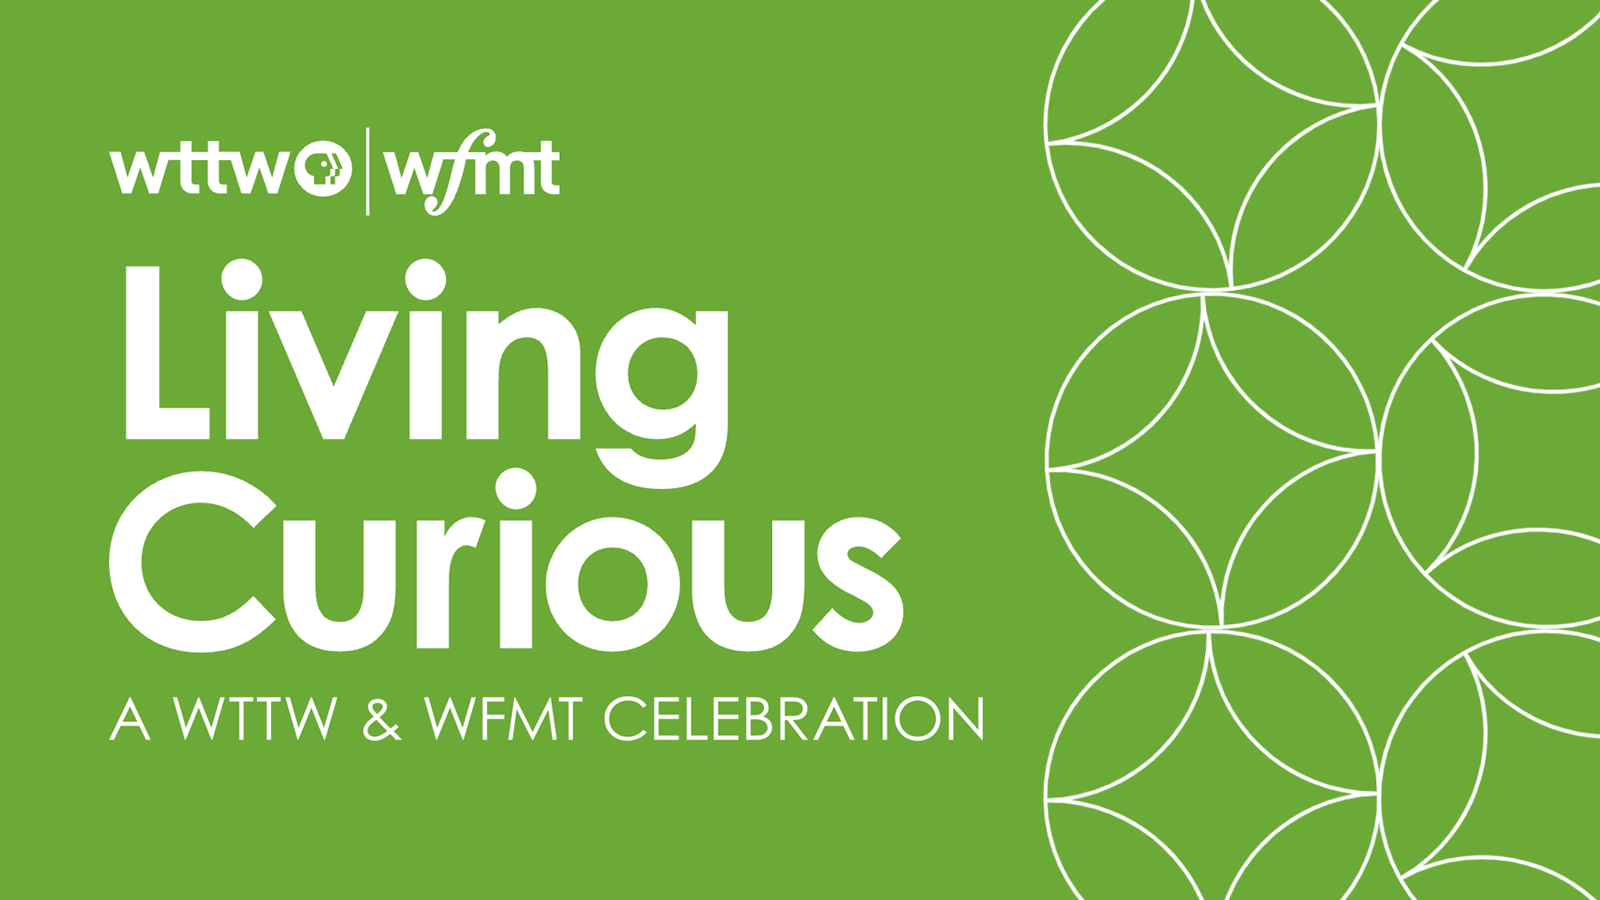 WFMT, Logopedia